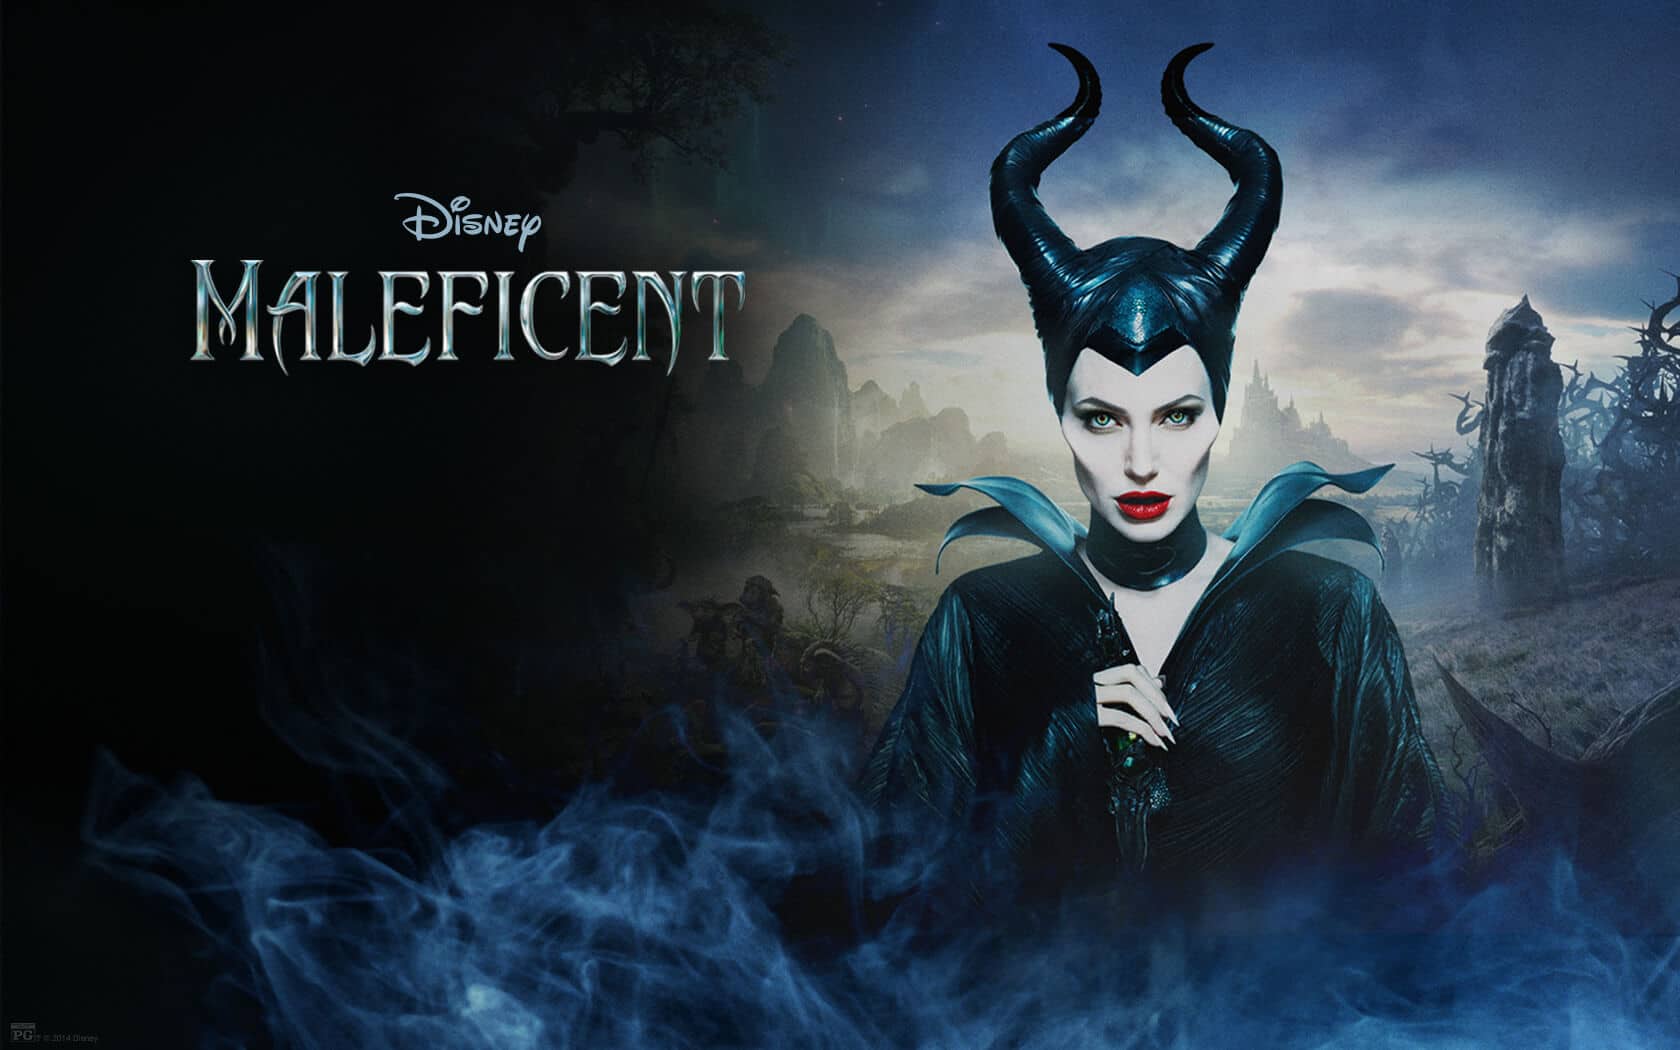 Maleficent: Mistress of Evil Hollywood Movie 2019. Cast